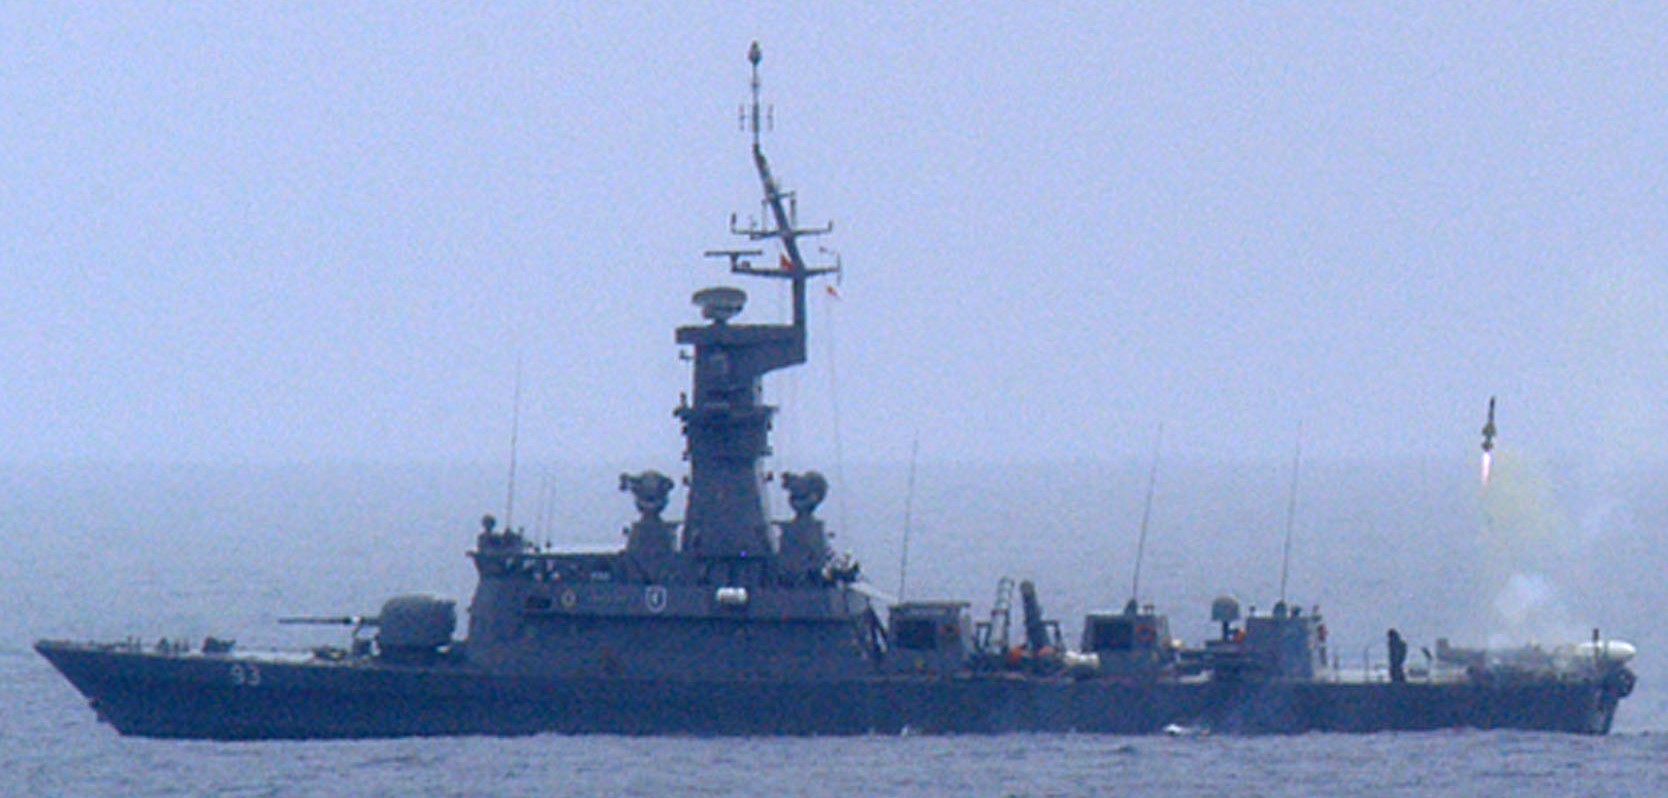 rss vengeance 93 victory class missile corvette singapore navy iai rafael barak sam rgm-84 harpoon ssm 02